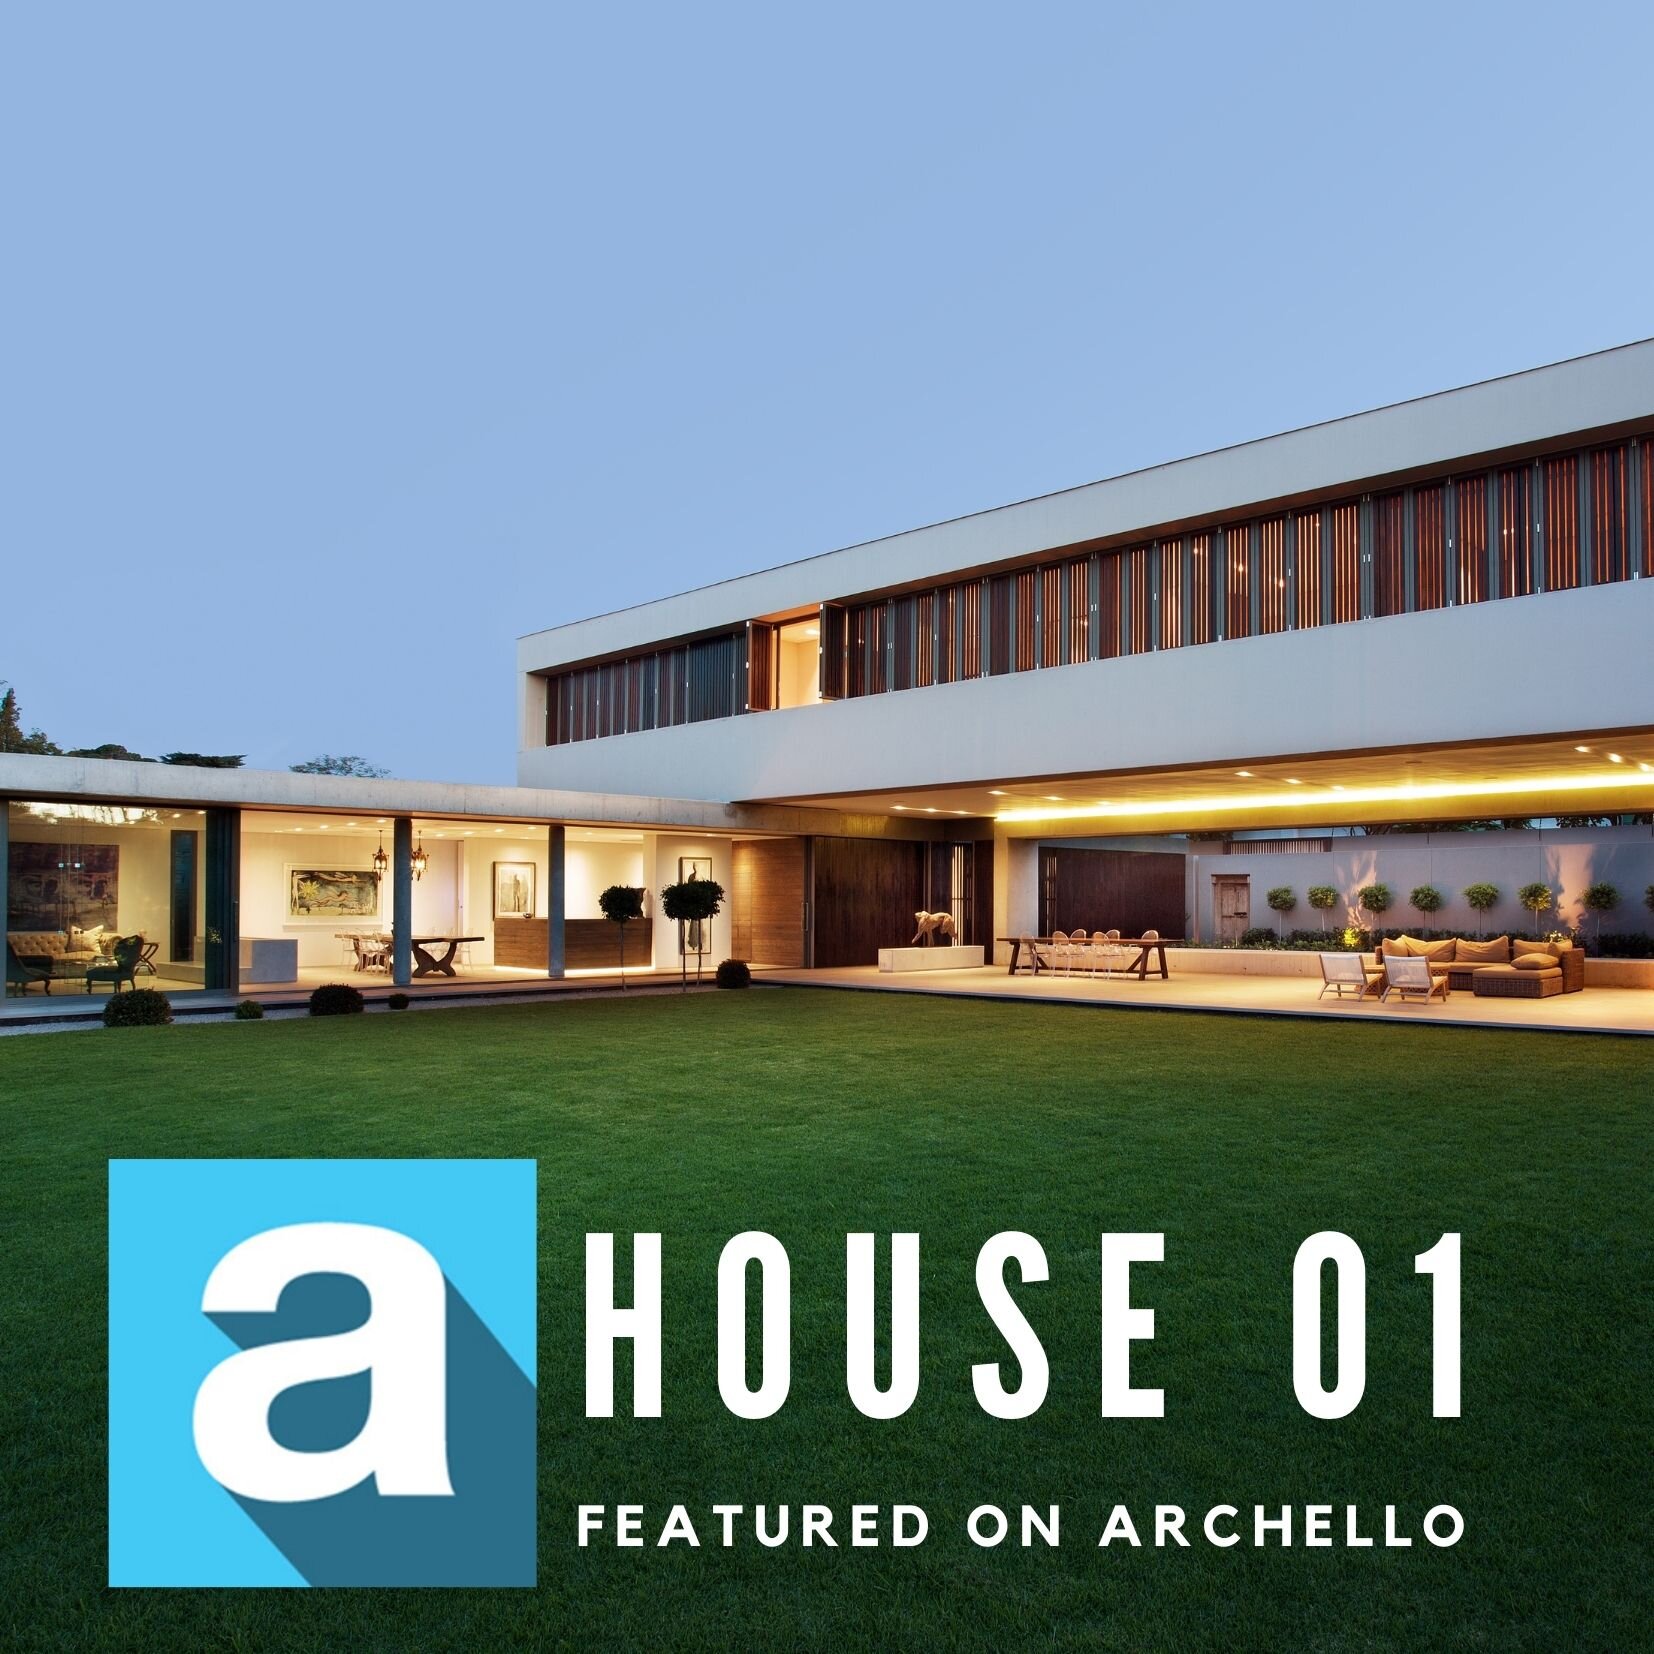 House 01 featured on Archello